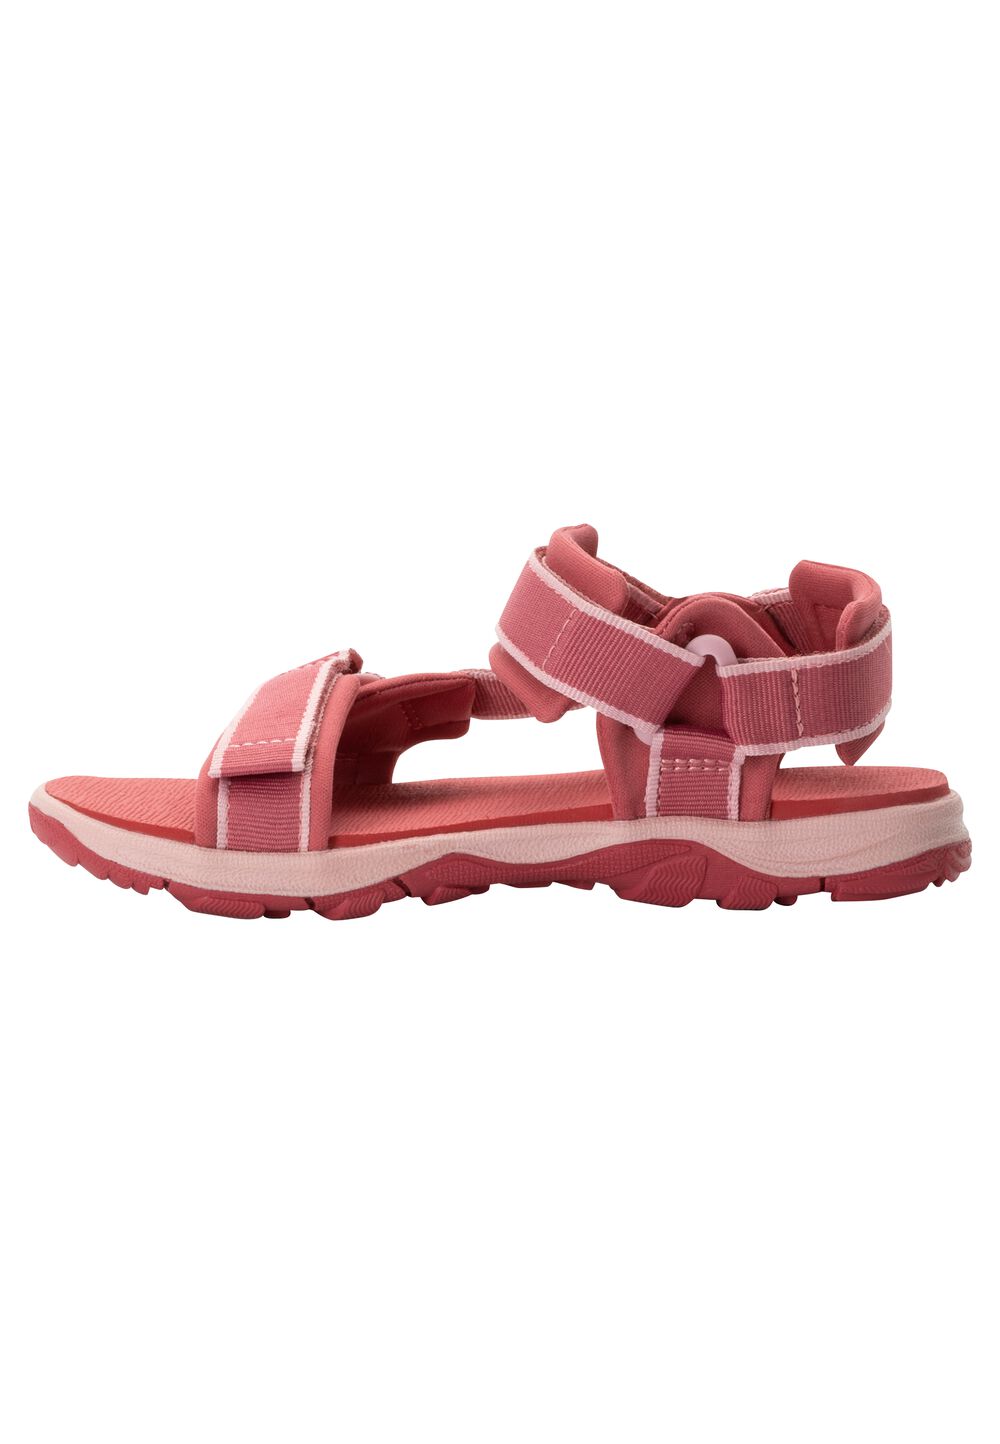 Jack Wolfskin Seven Seas 3 Kids Kinderen sandalen 28 soft pink soft pink